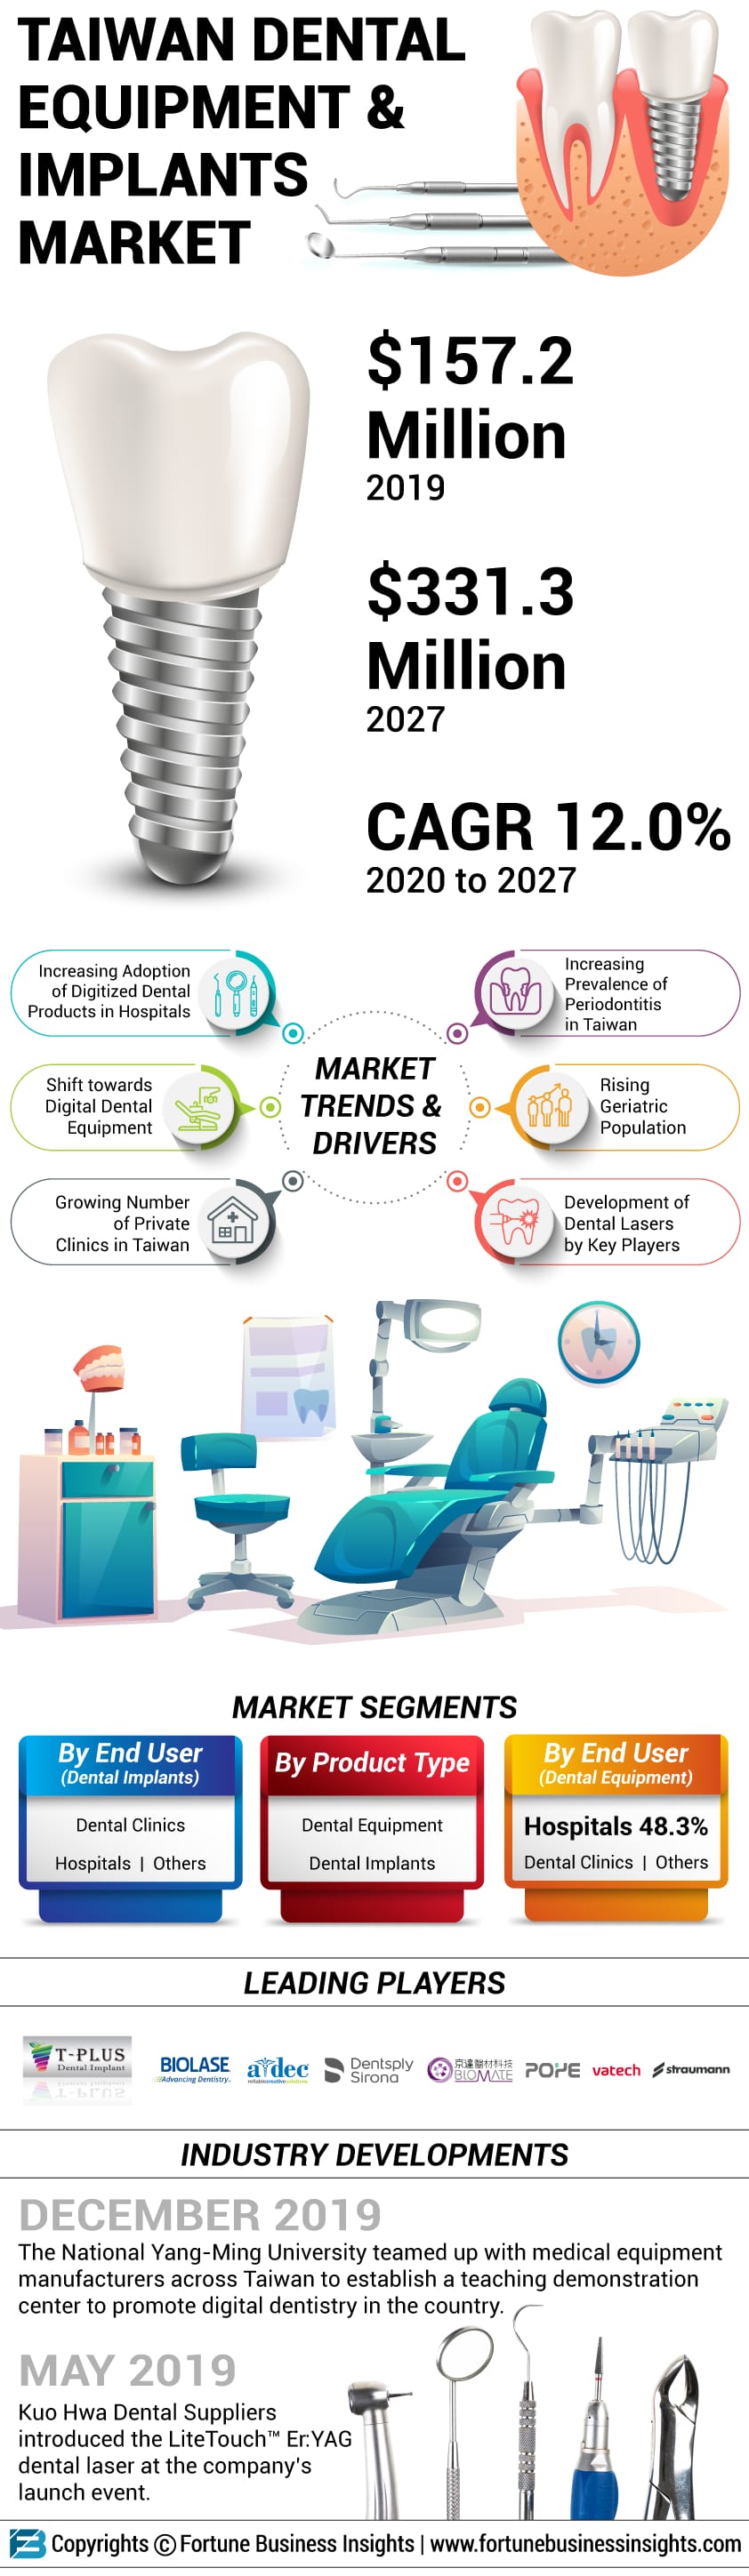 Taiwan Dental Equipment & Implants Market